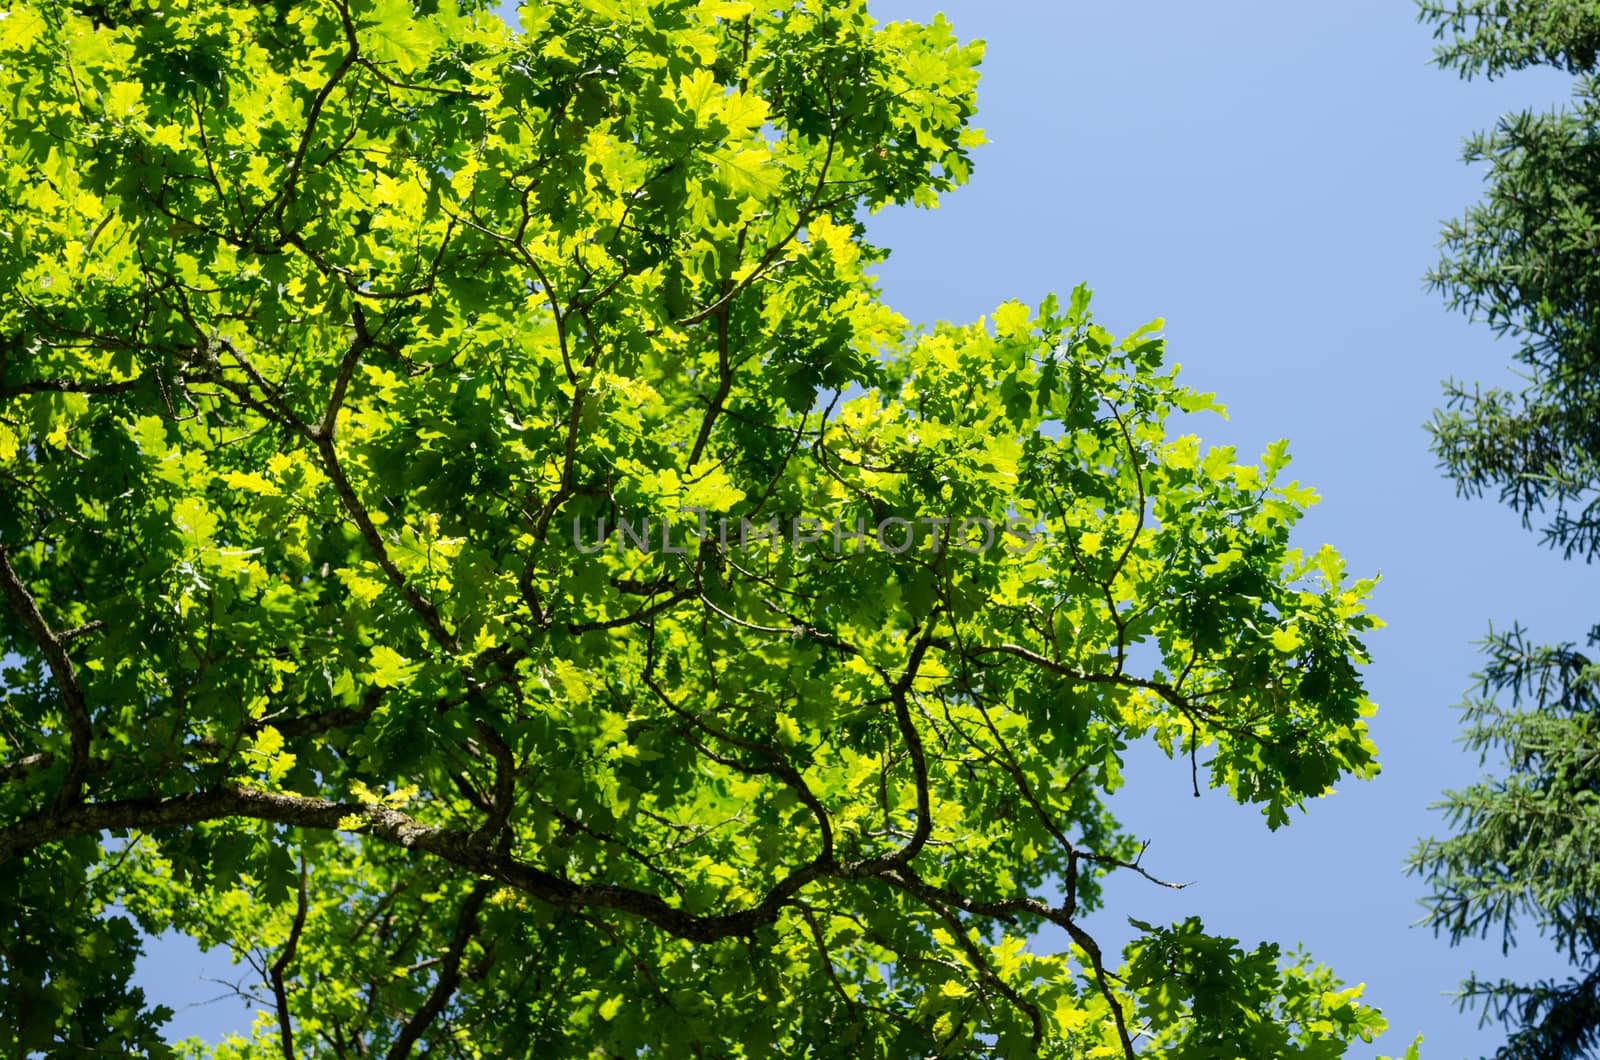 birch leaf shining in sun on blue sky background by sauletas